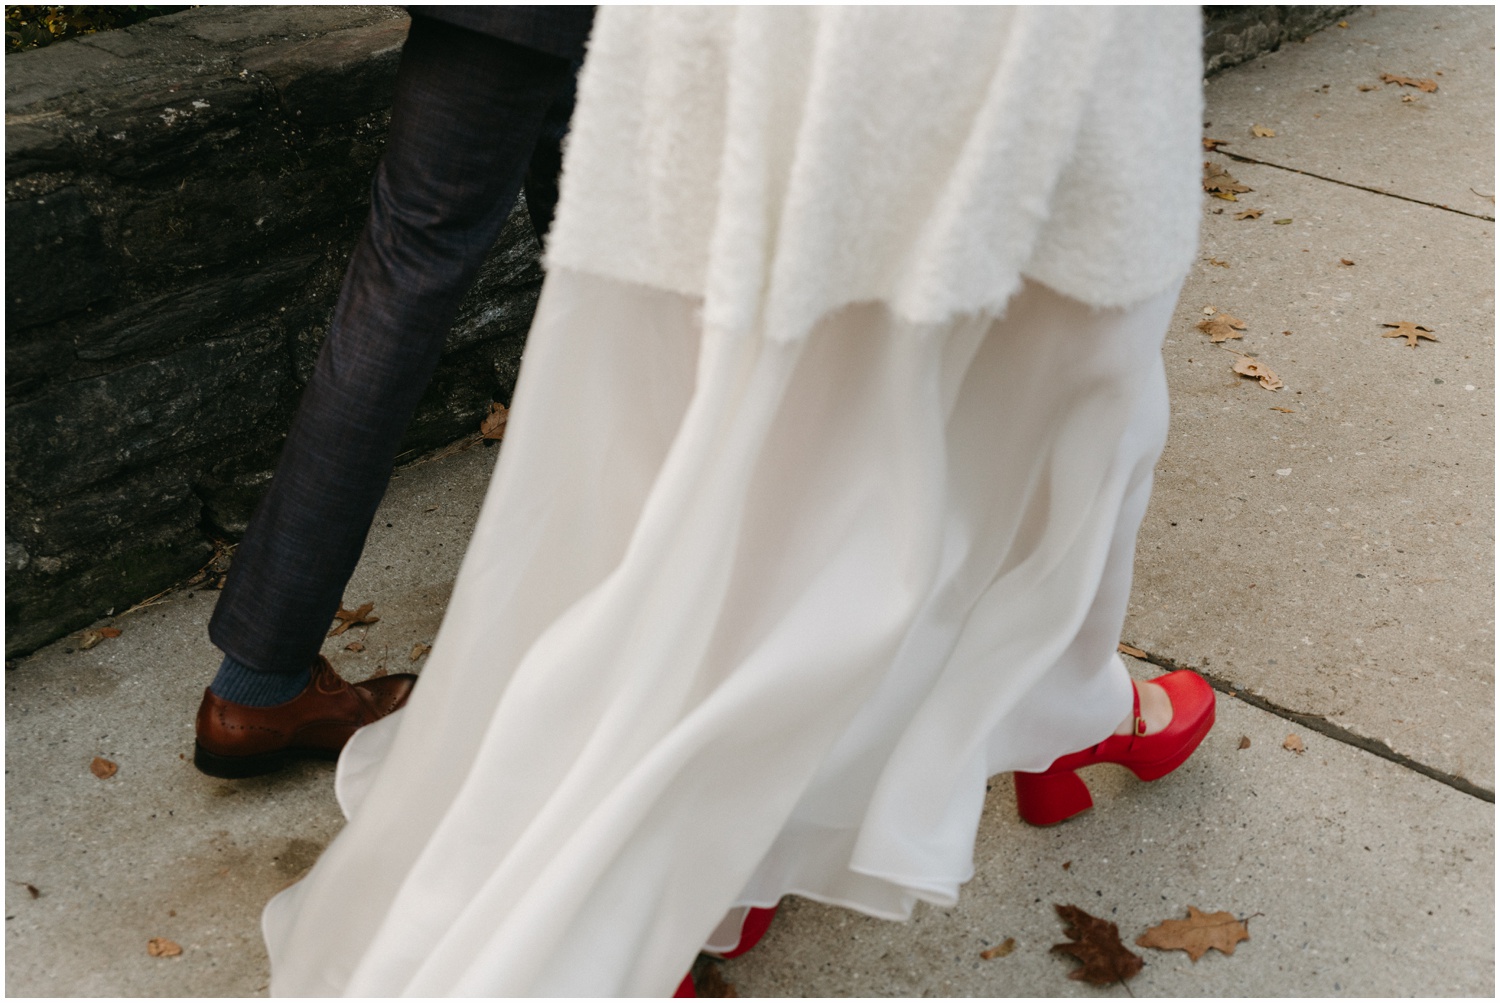 A bride in red wedding shoes walks down a Philadelphia sidewalk with a groom.